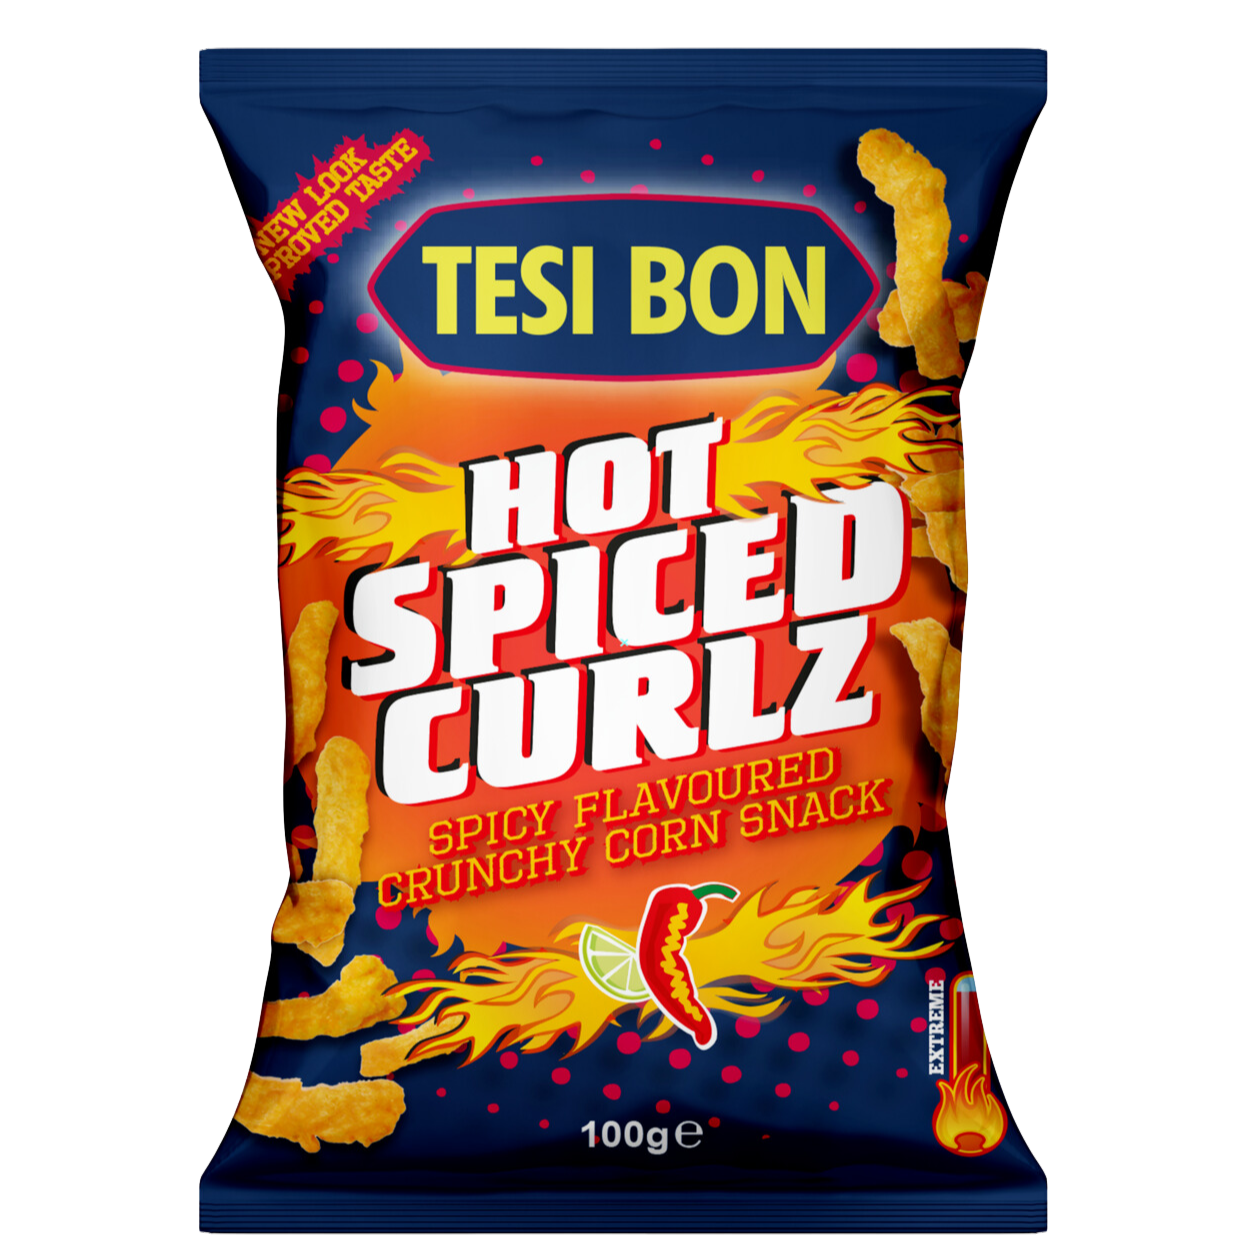 Tesi Bon Cheese Curlz Hot